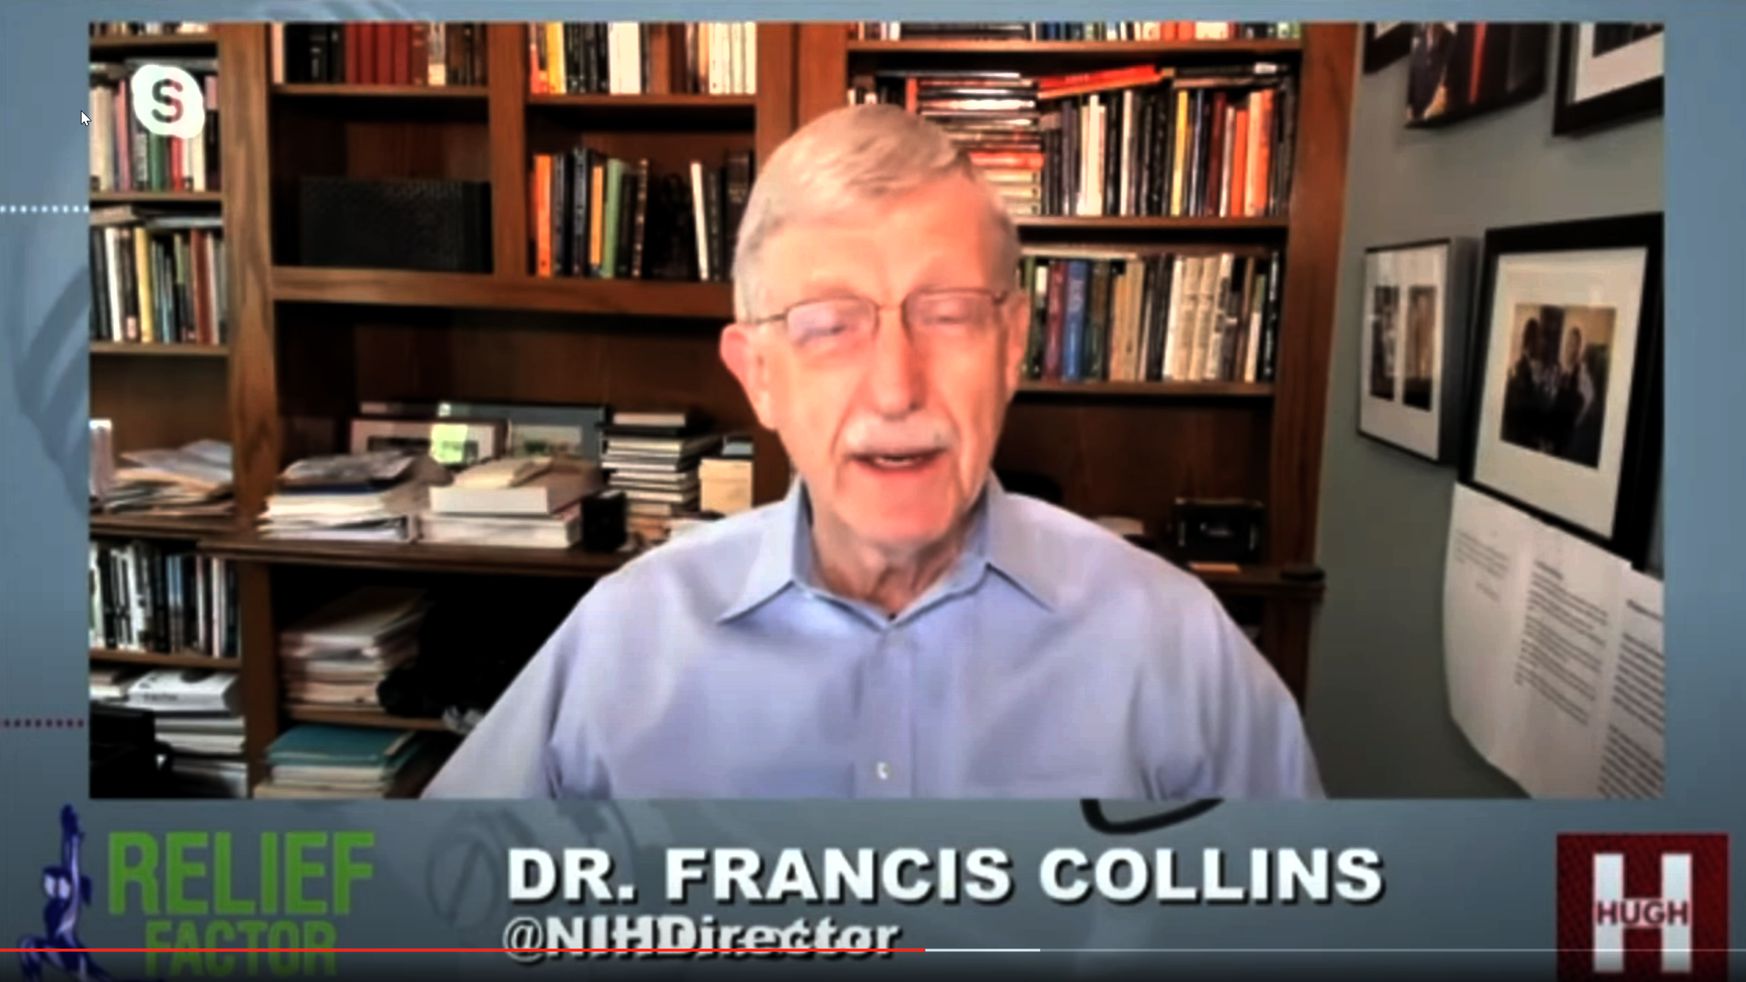 Dr. Francis Collins speaking on Hugh Hewitt Show